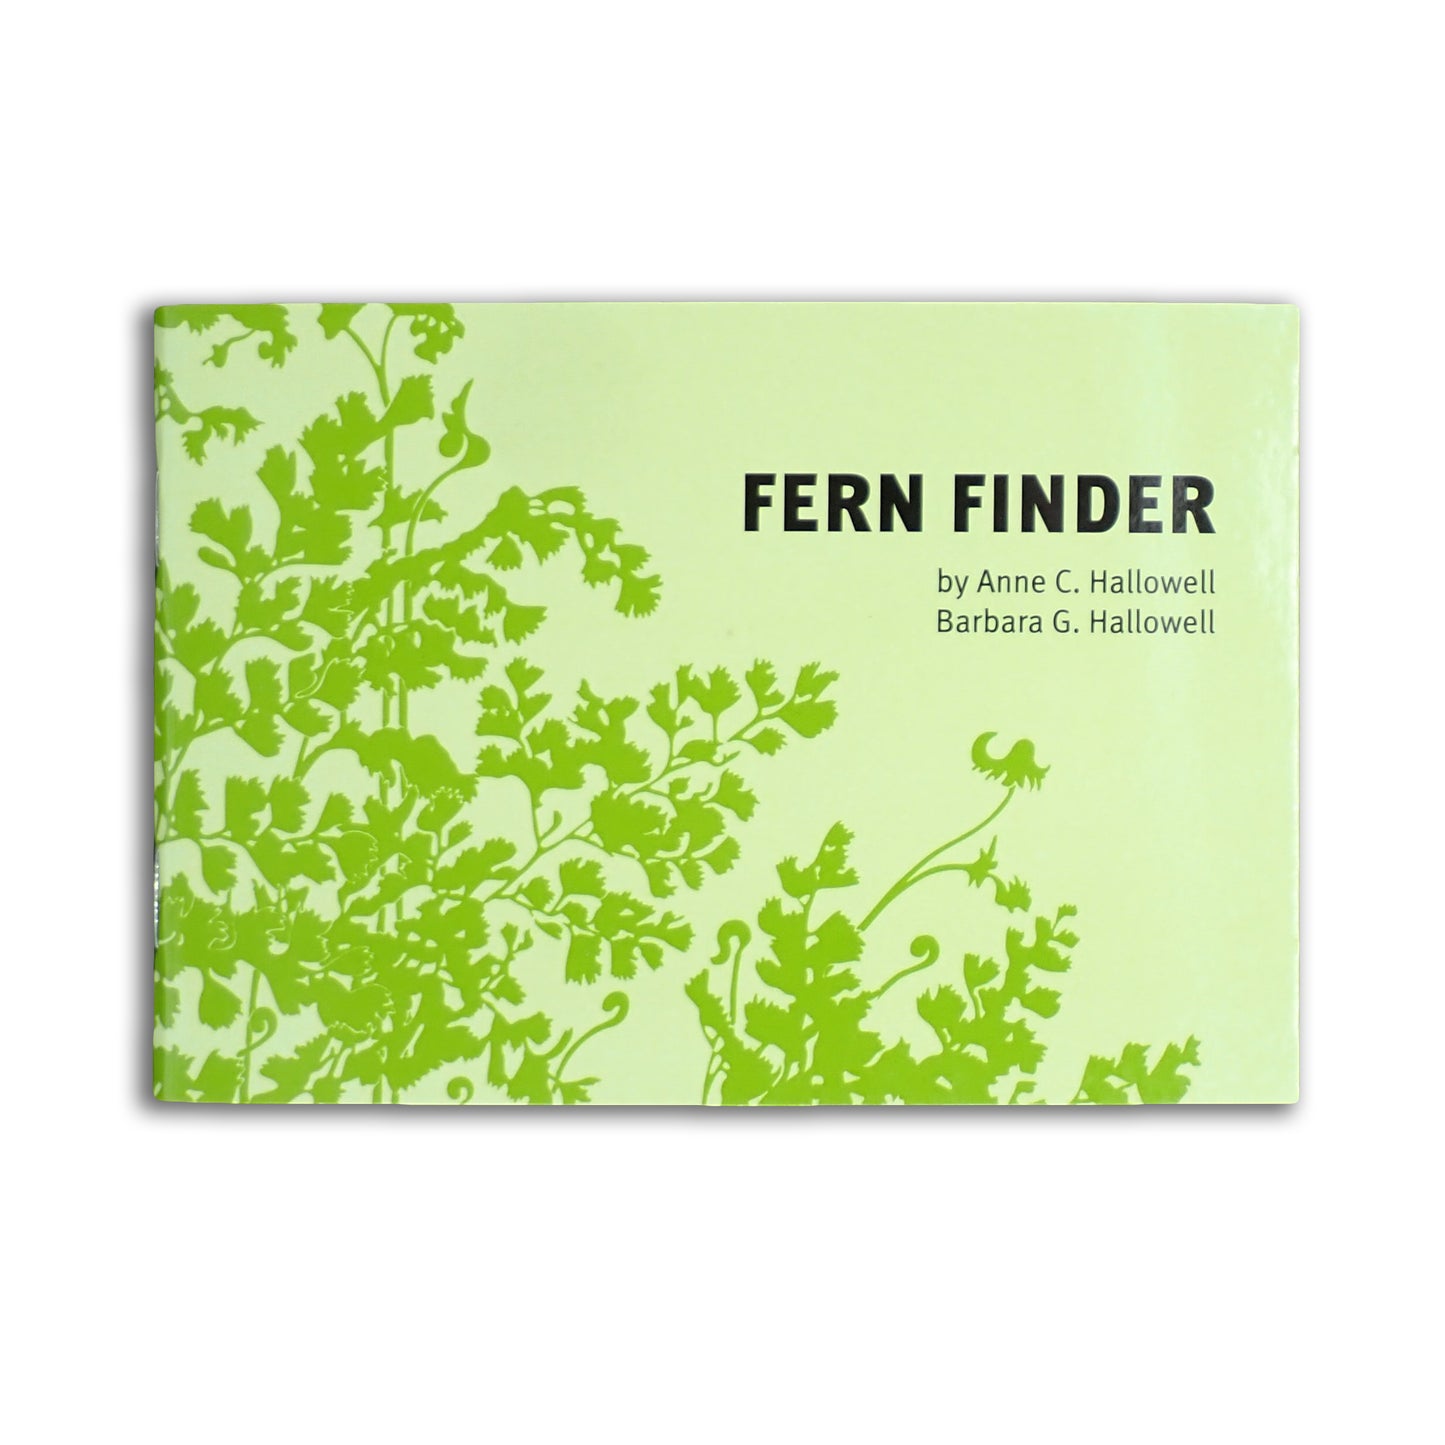 Fern Finder - Anne C. Hallowell and Barbara G. Hallowell